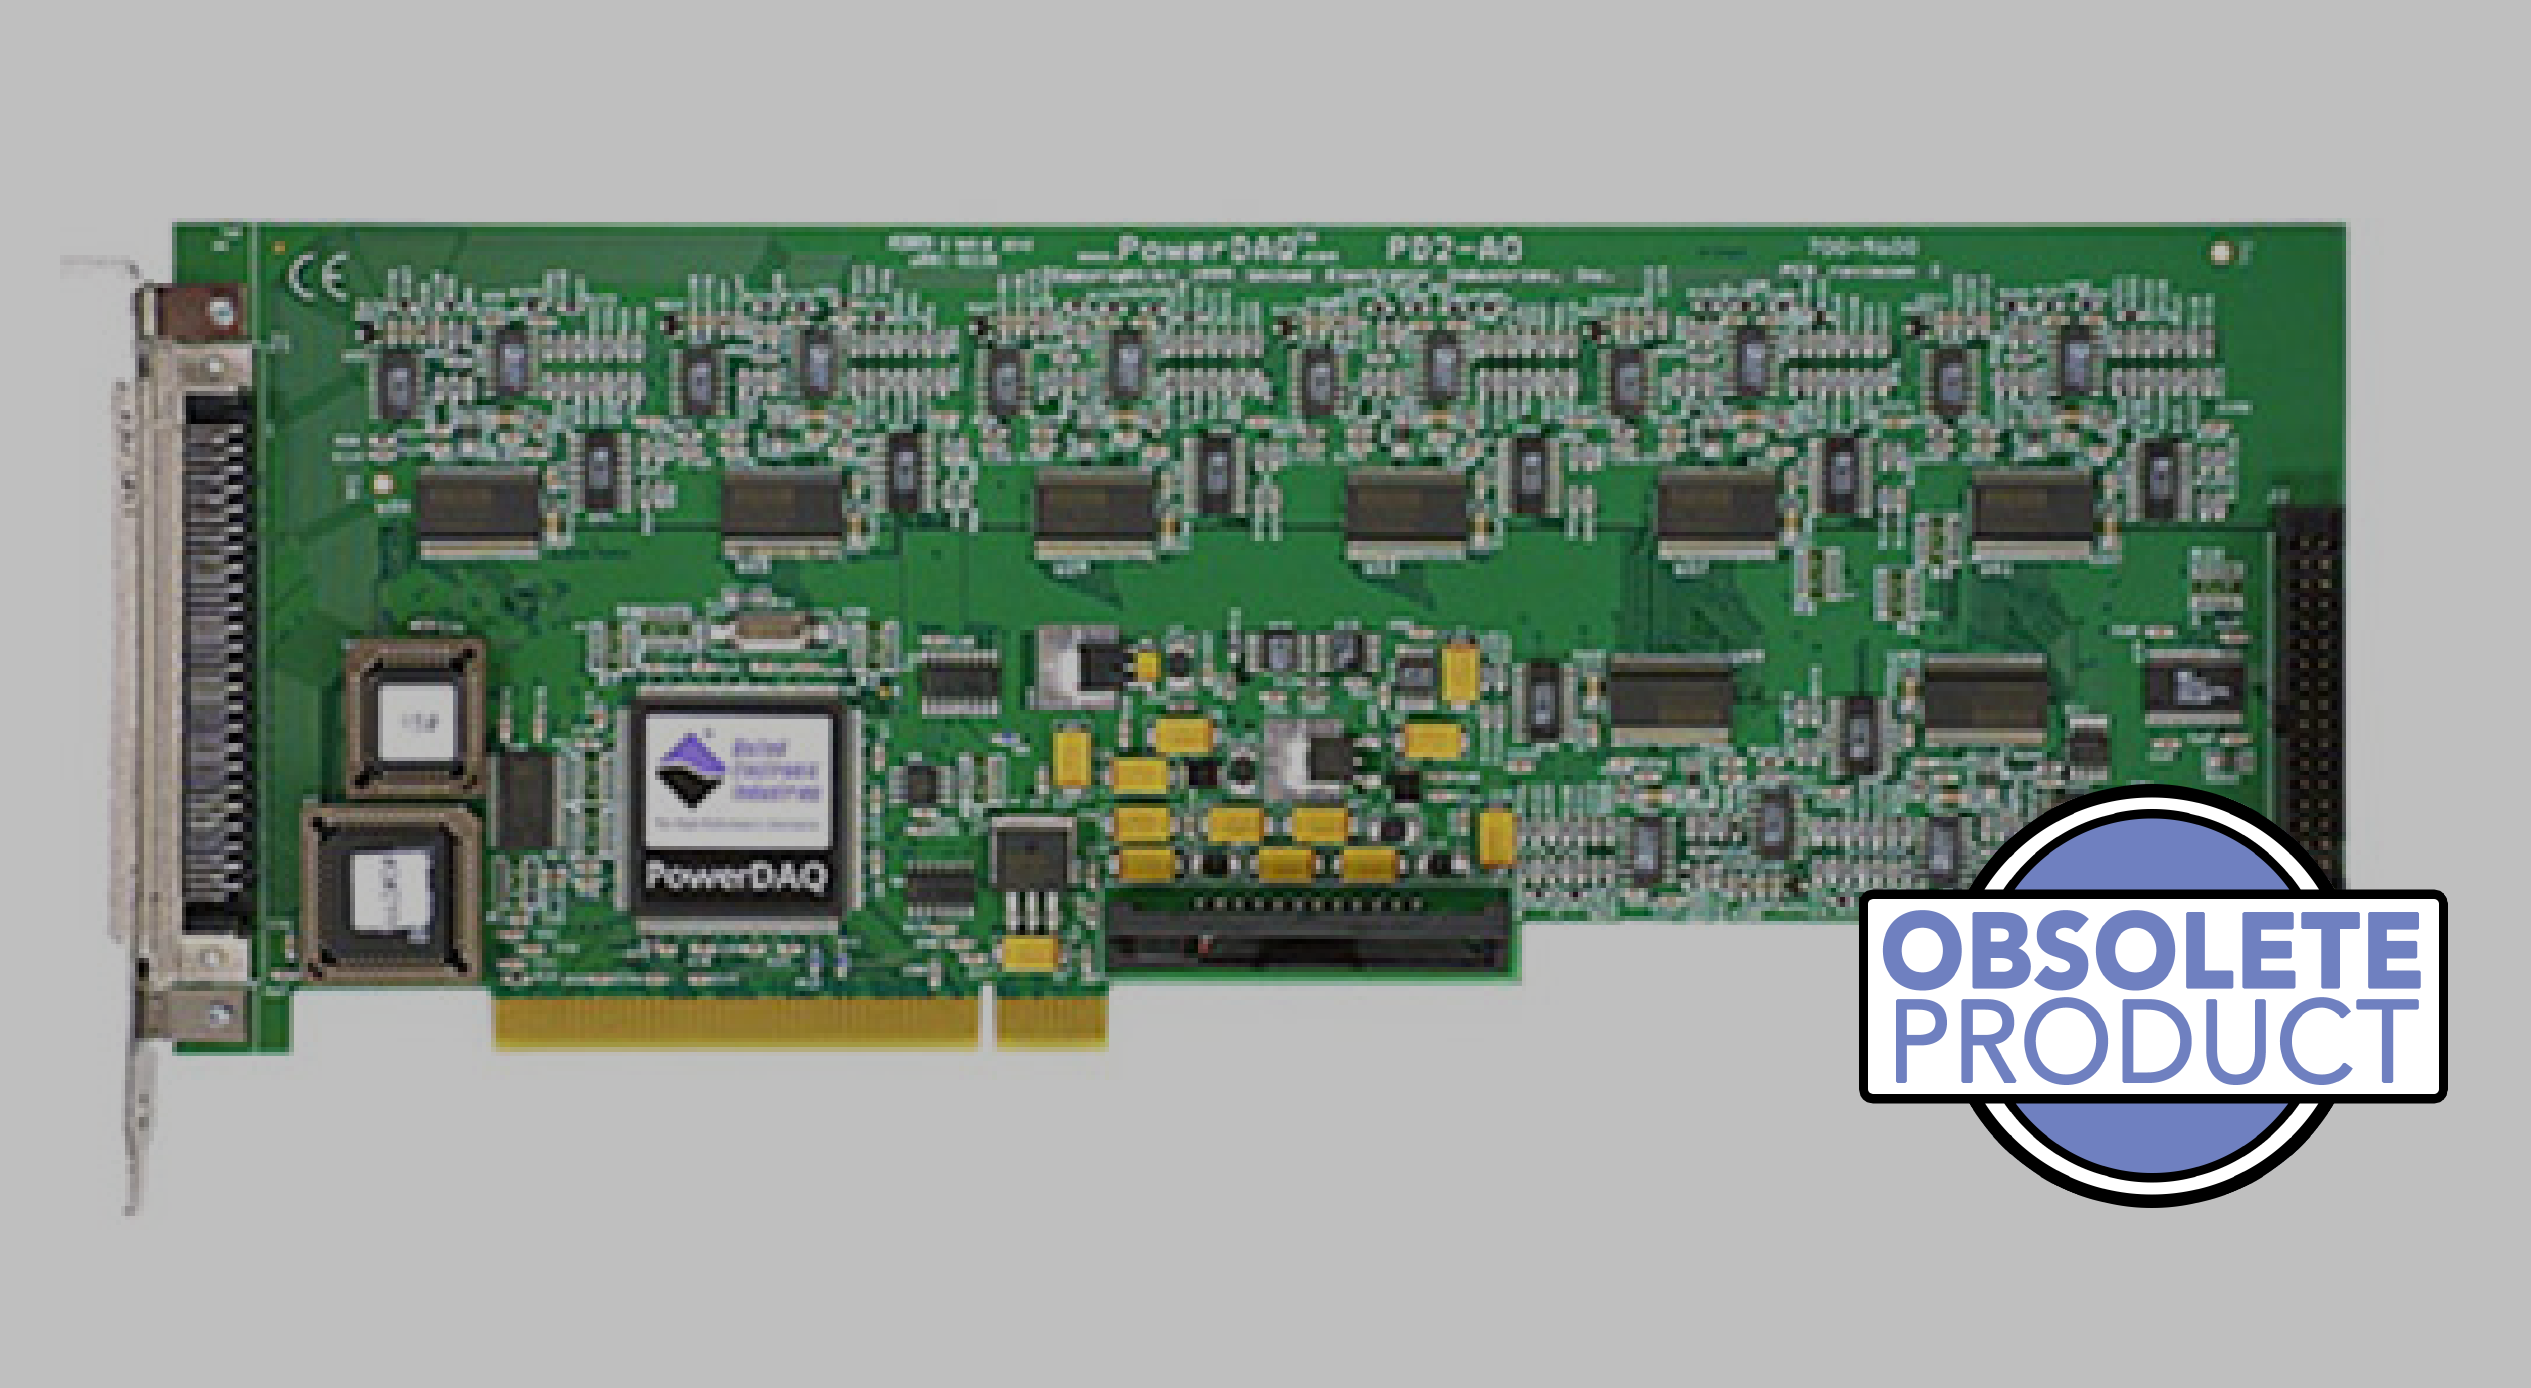 32-channel, 16-bit, 100 kS/s per channel PCI analog output board